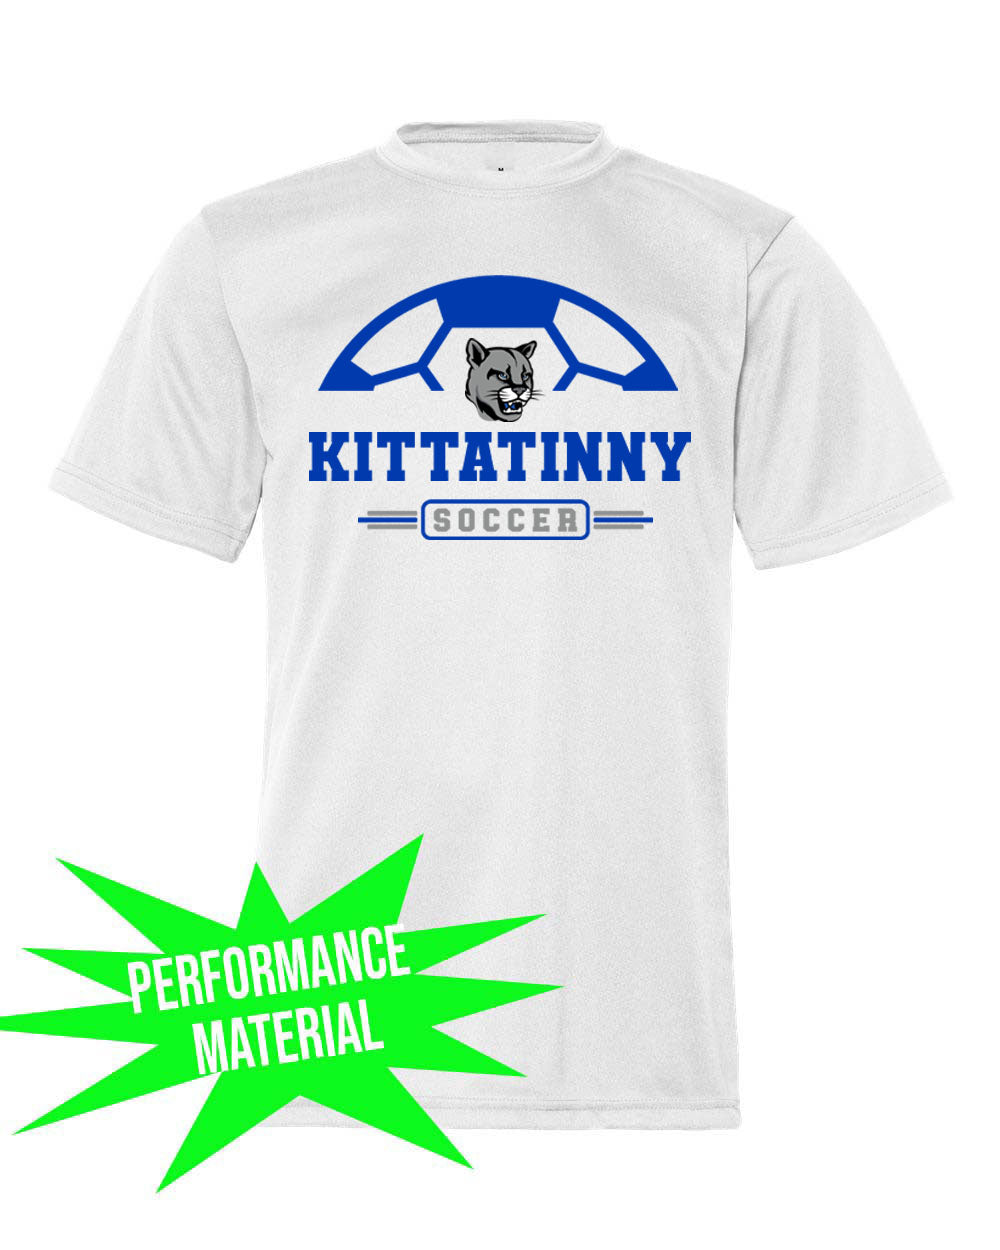 Kittatinny Soccer Performance Material T-Shirt design 2